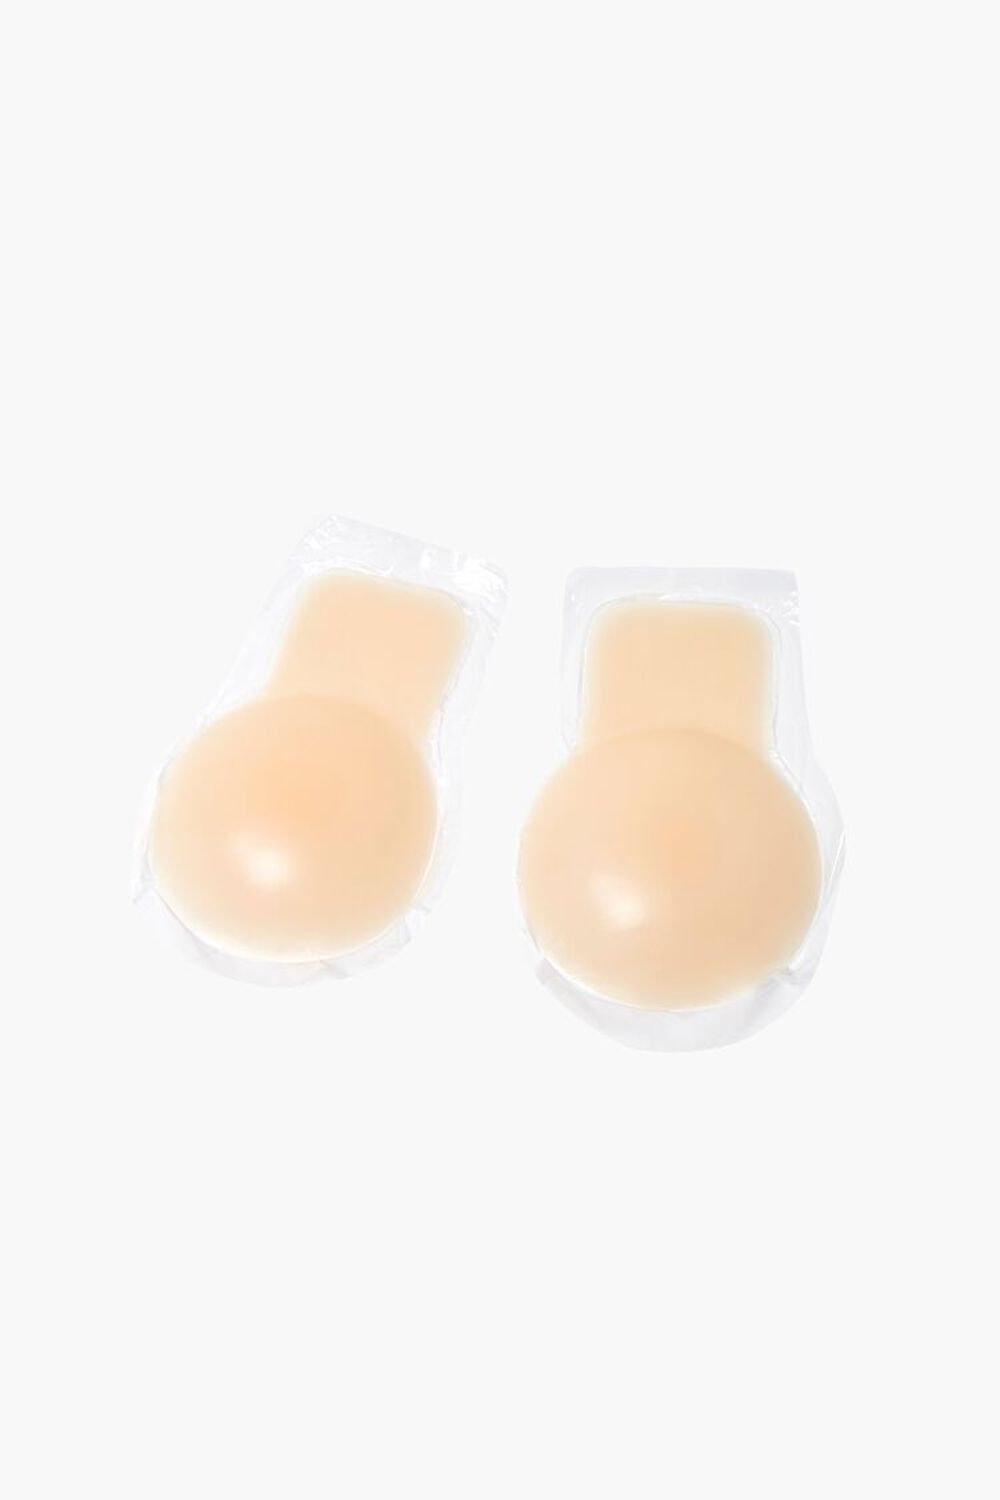 NUDE Silicone Nipple Covers, image 1